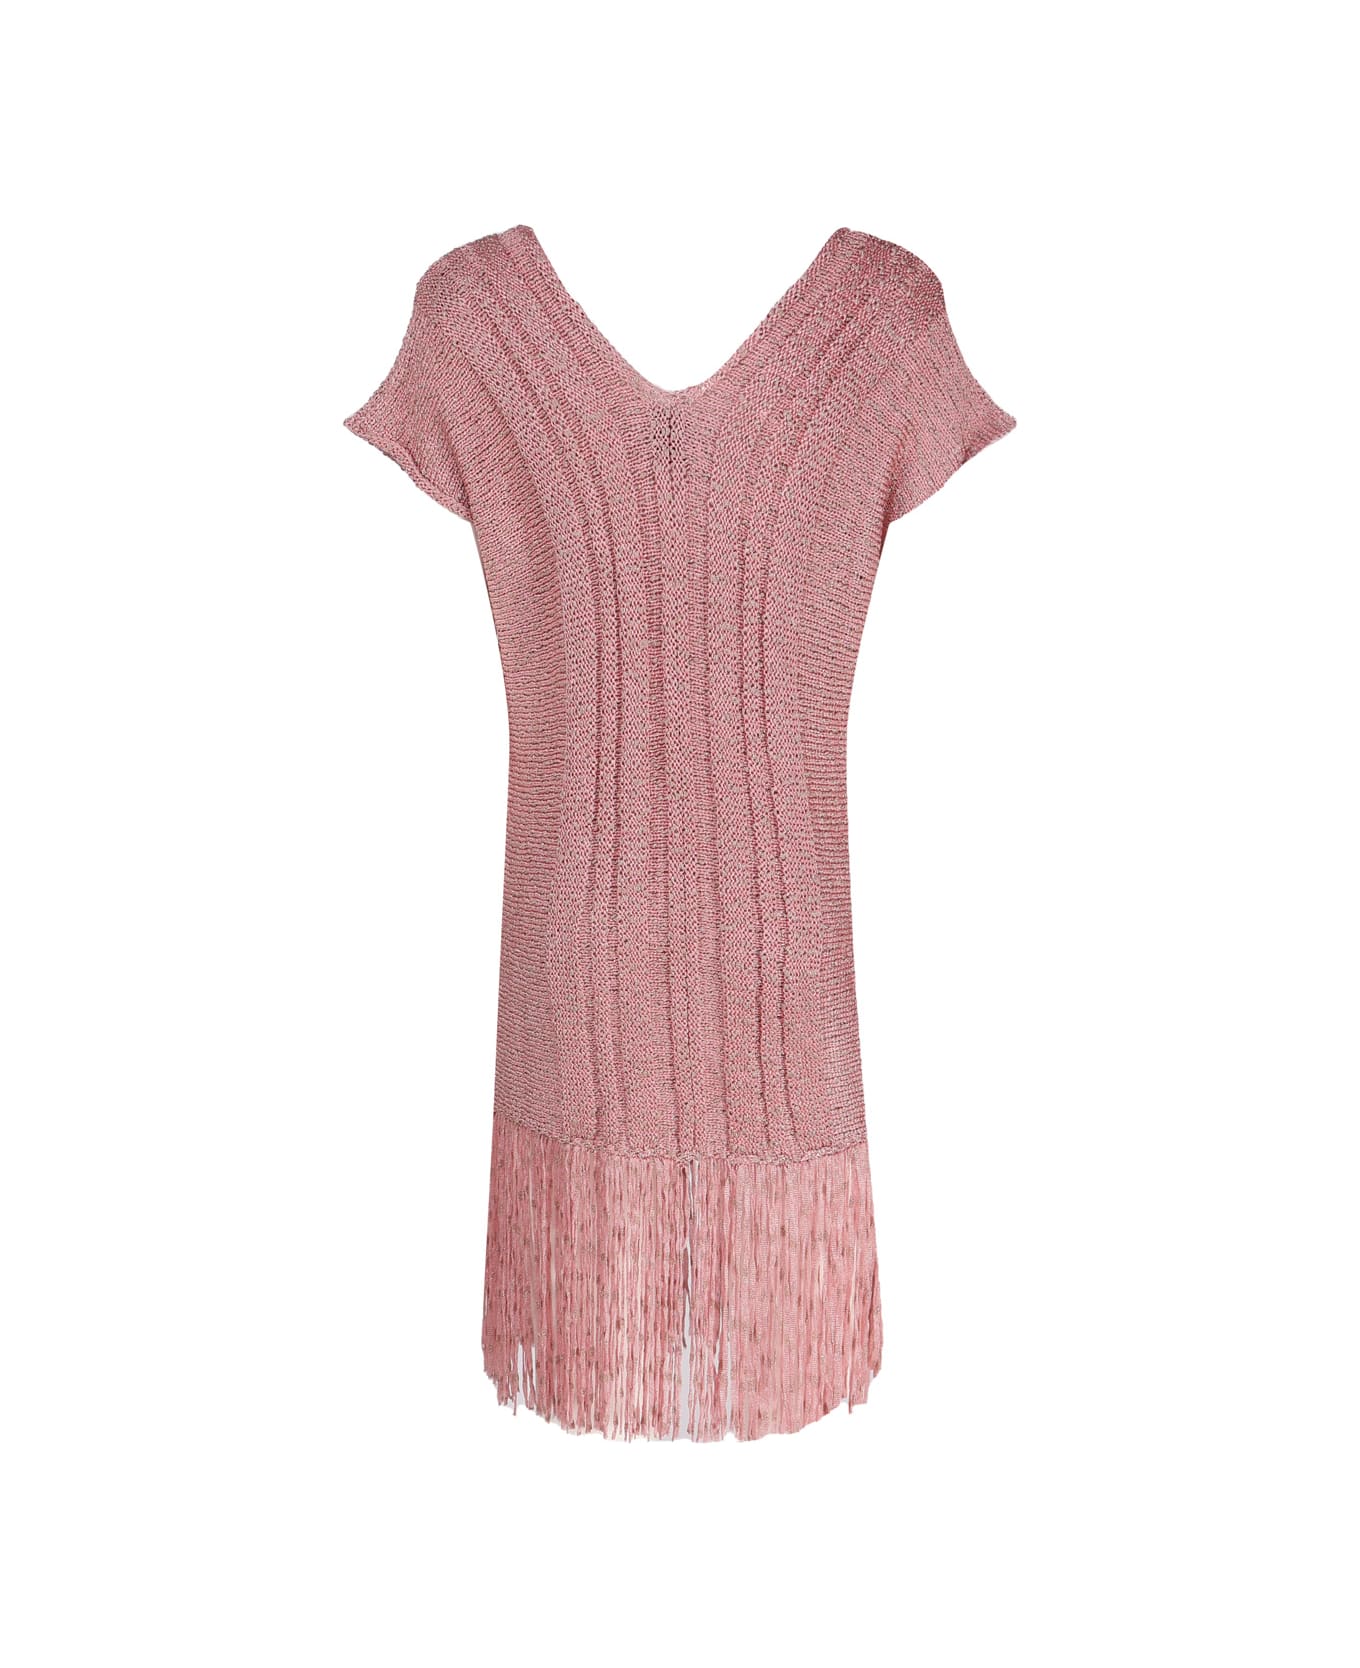 Fisico - Cristina Ferrari Cover-up Dress - Pink